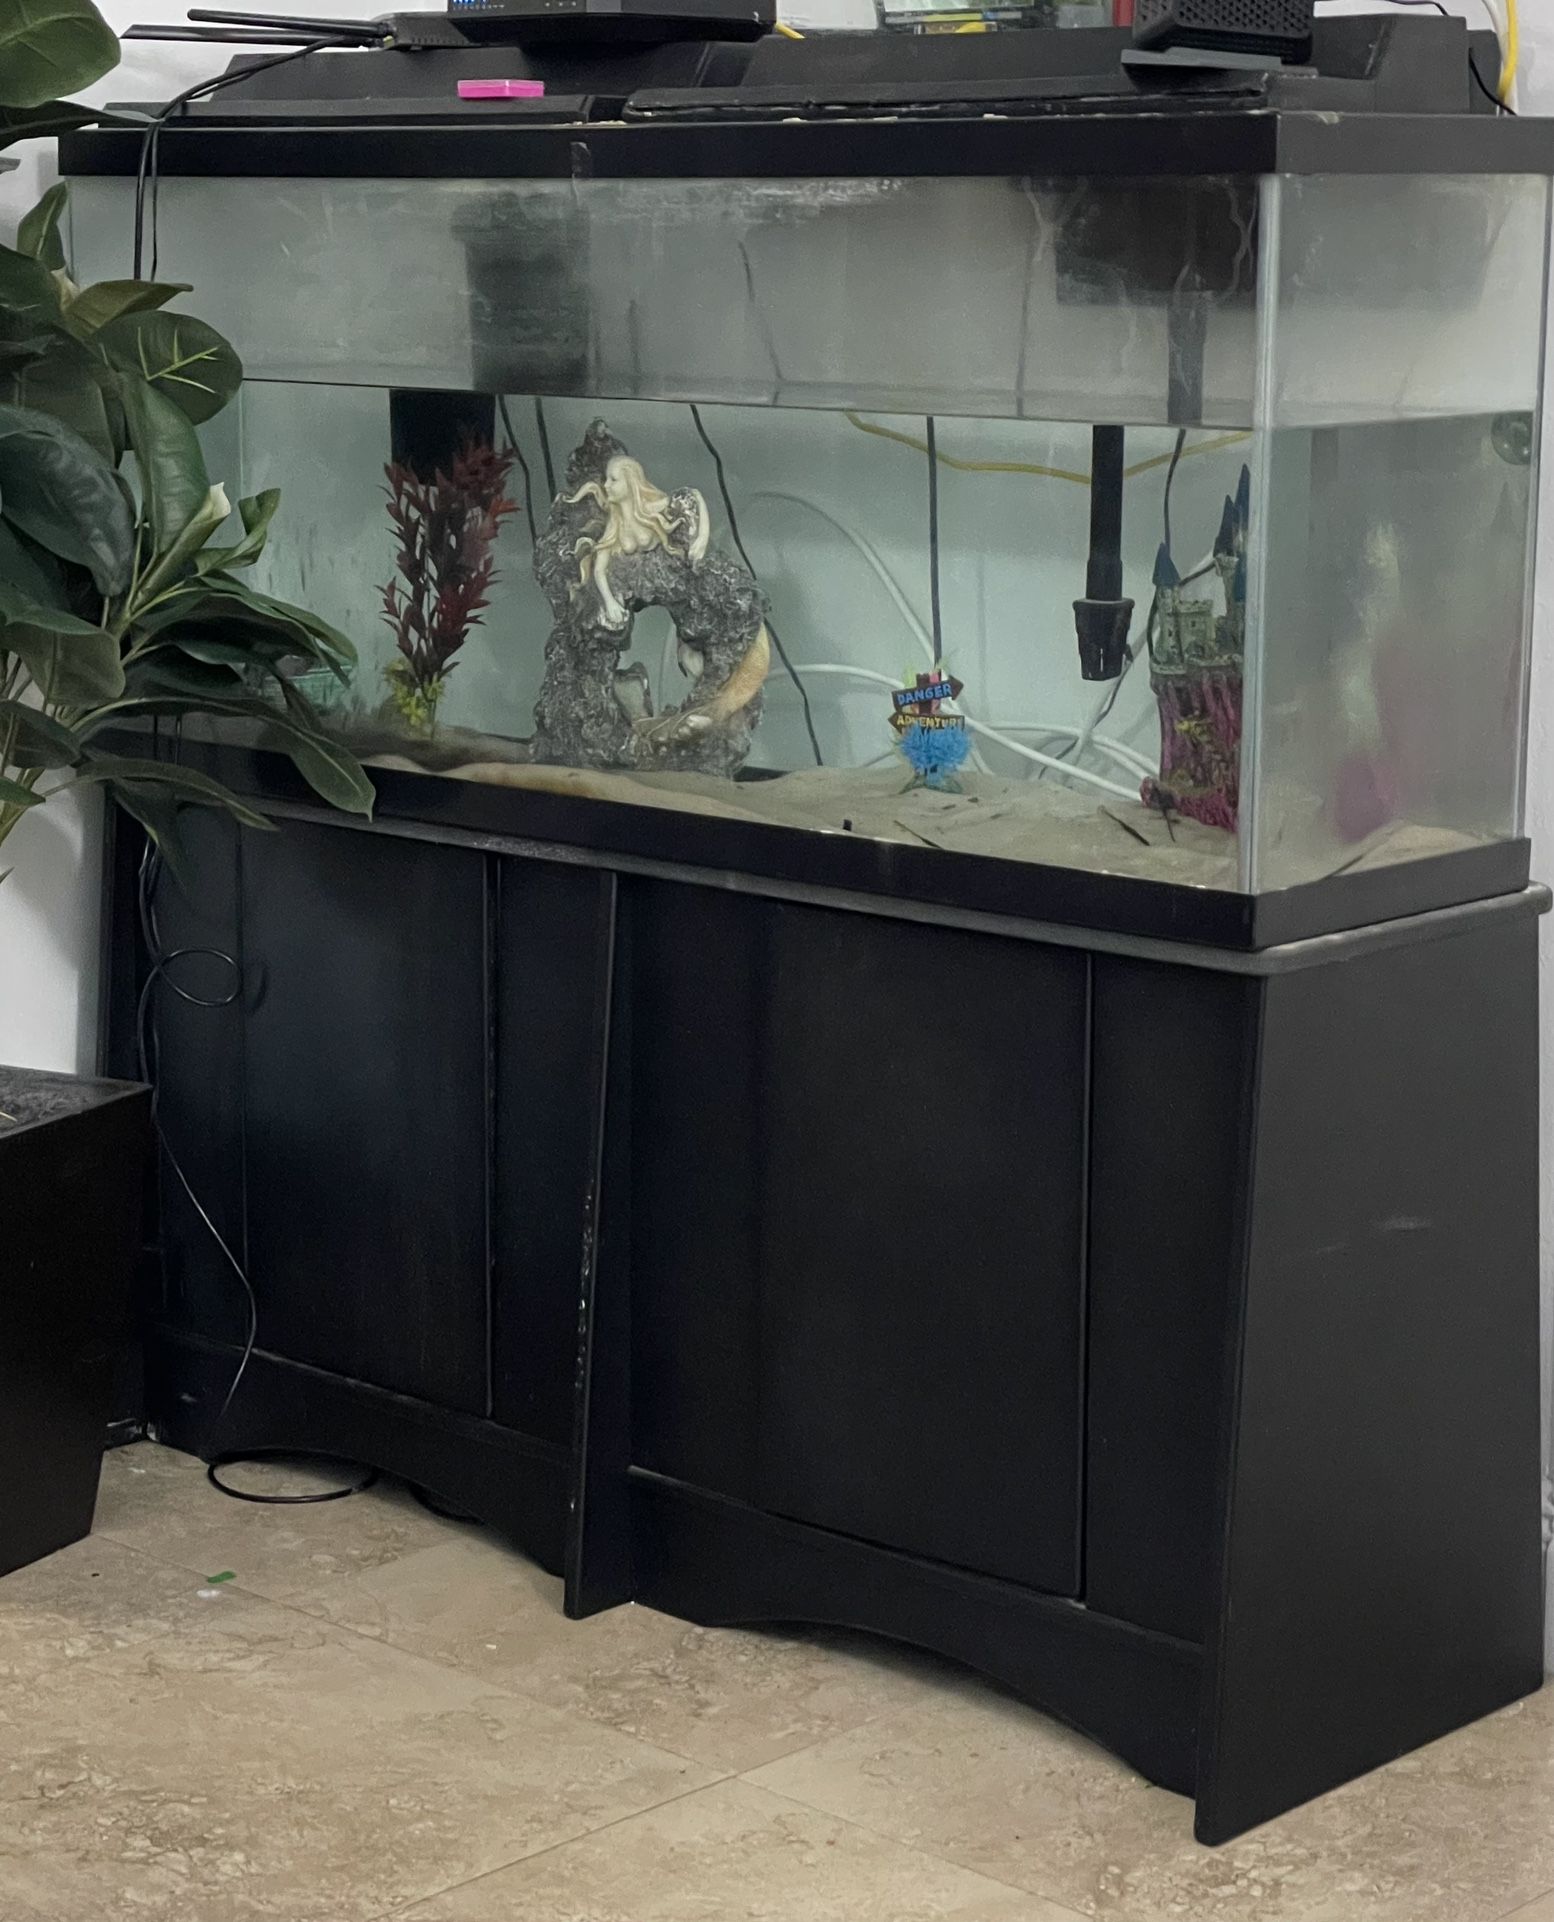 Aquarium Fish Tank 55gallons-MAKE OFFER